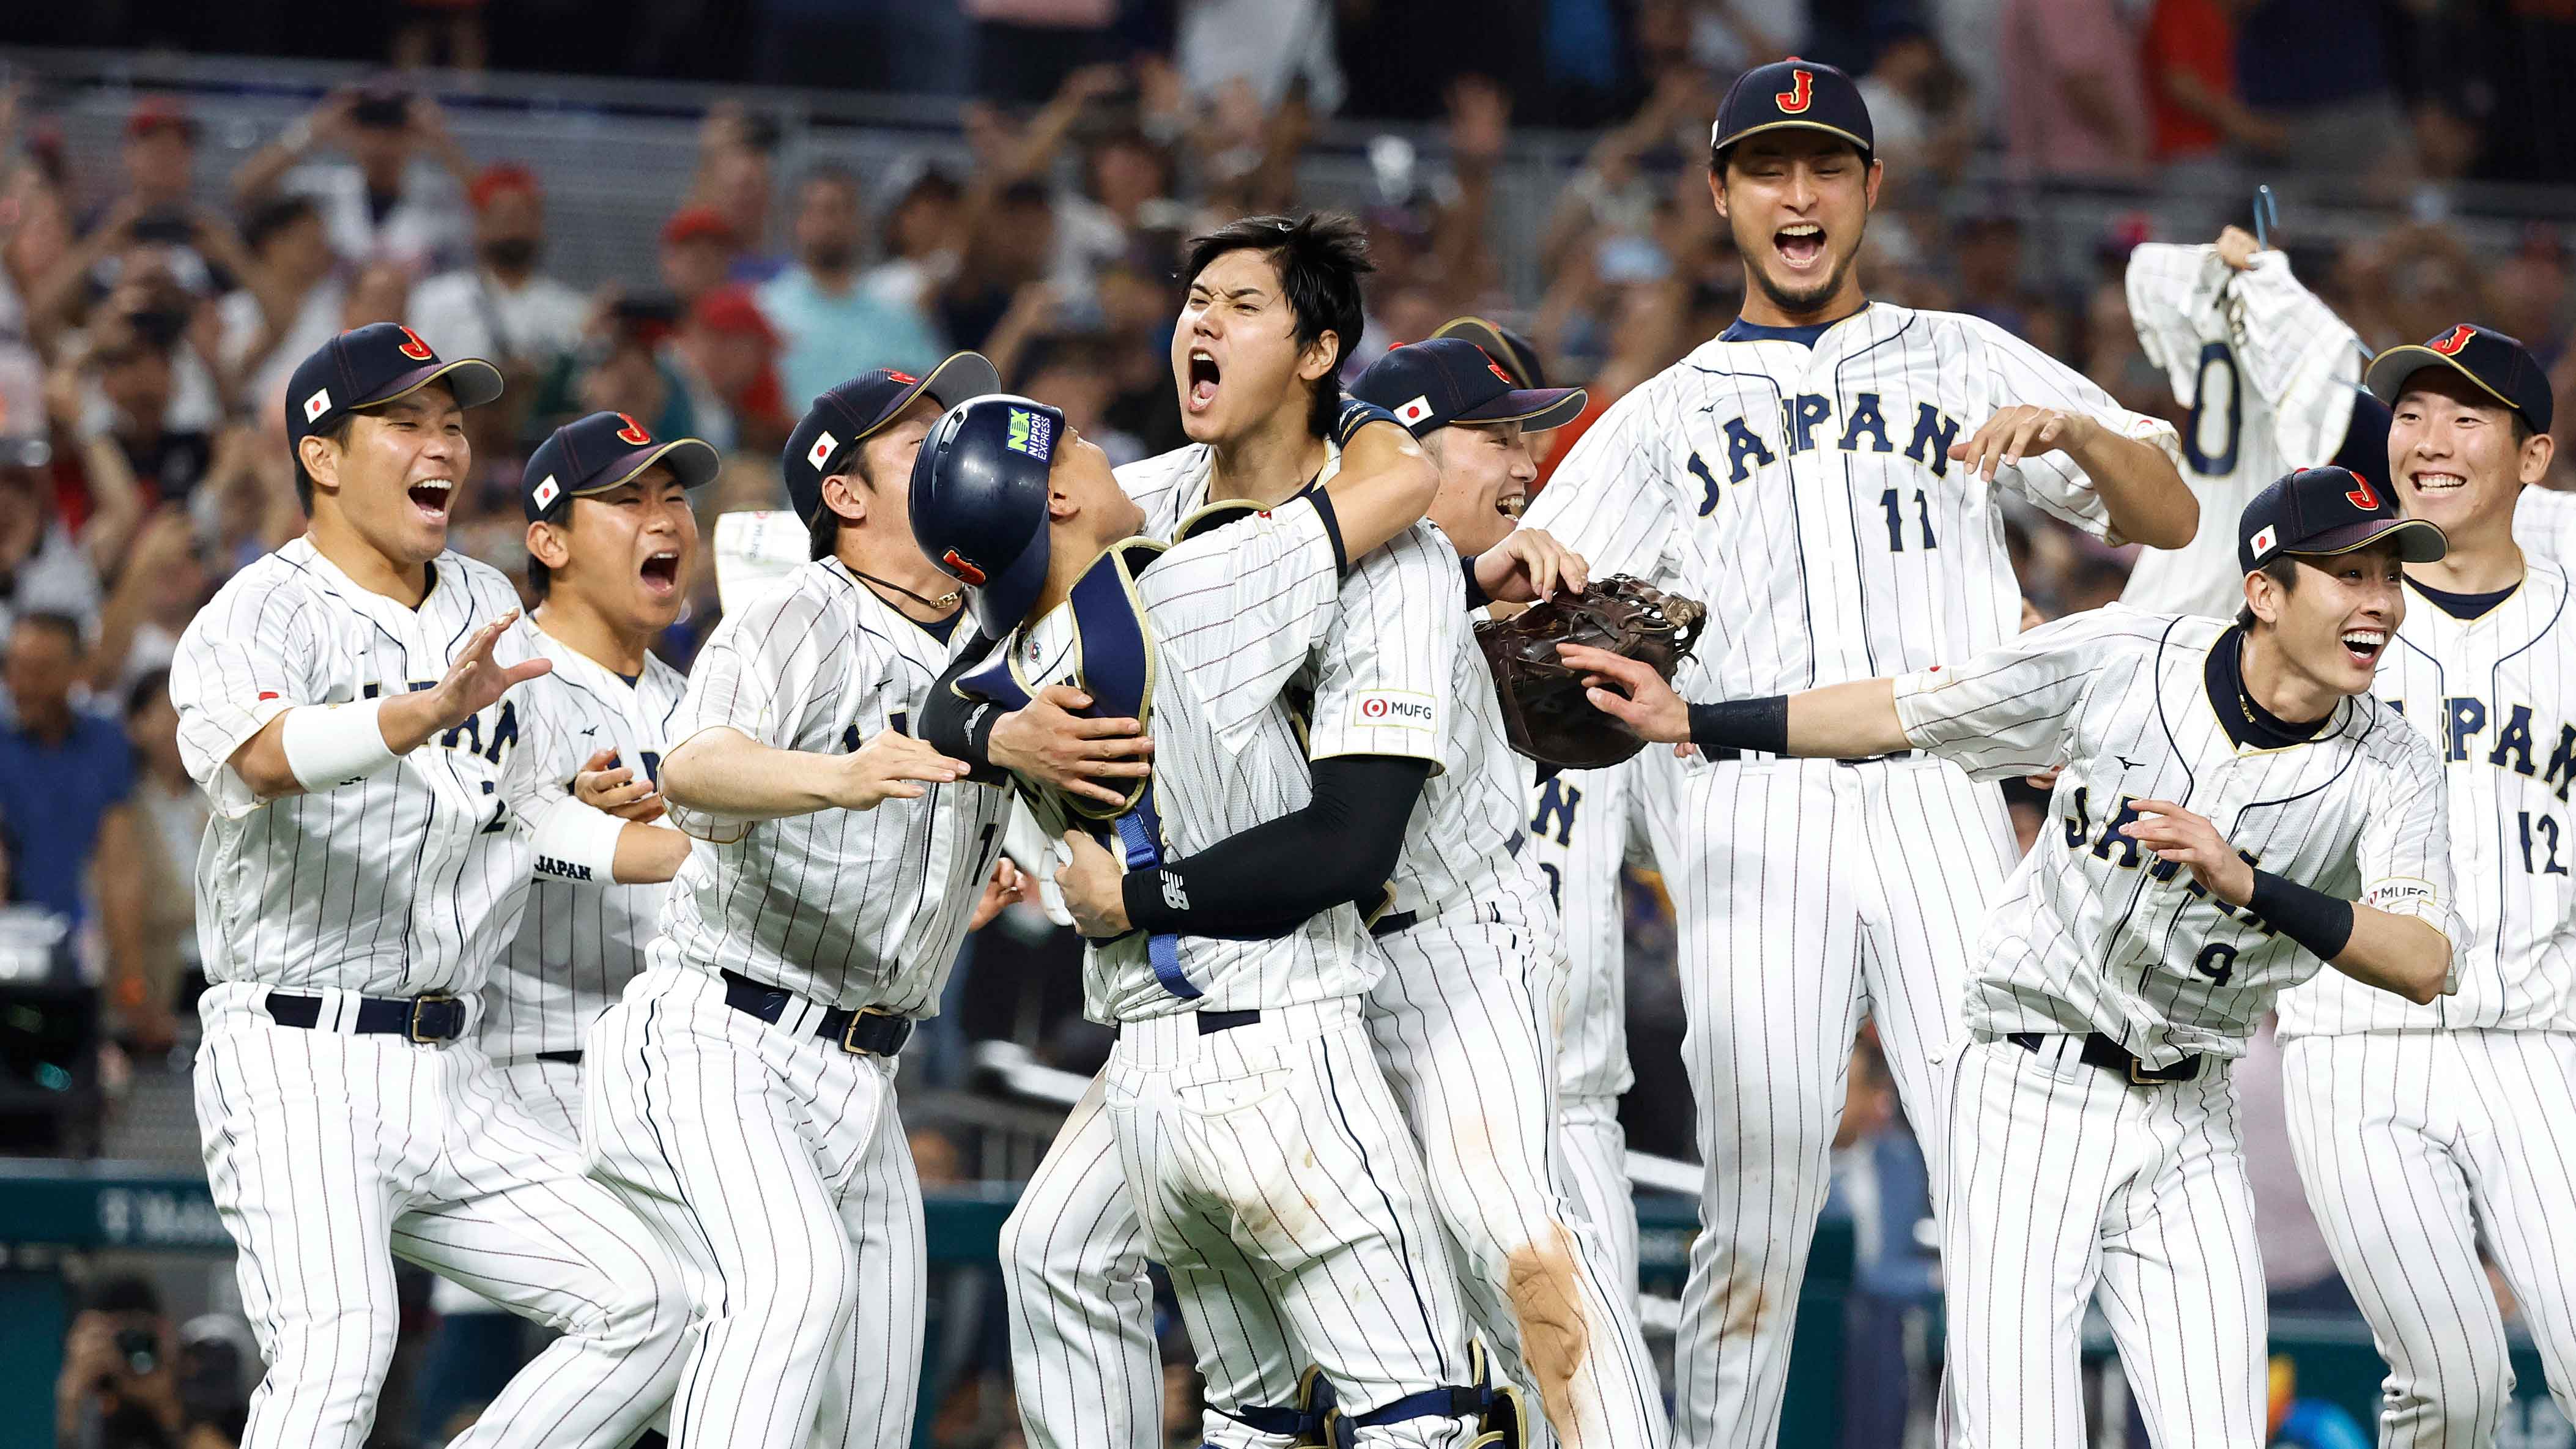 Ichiro singles in Yankees debut, 4-1 win over M's